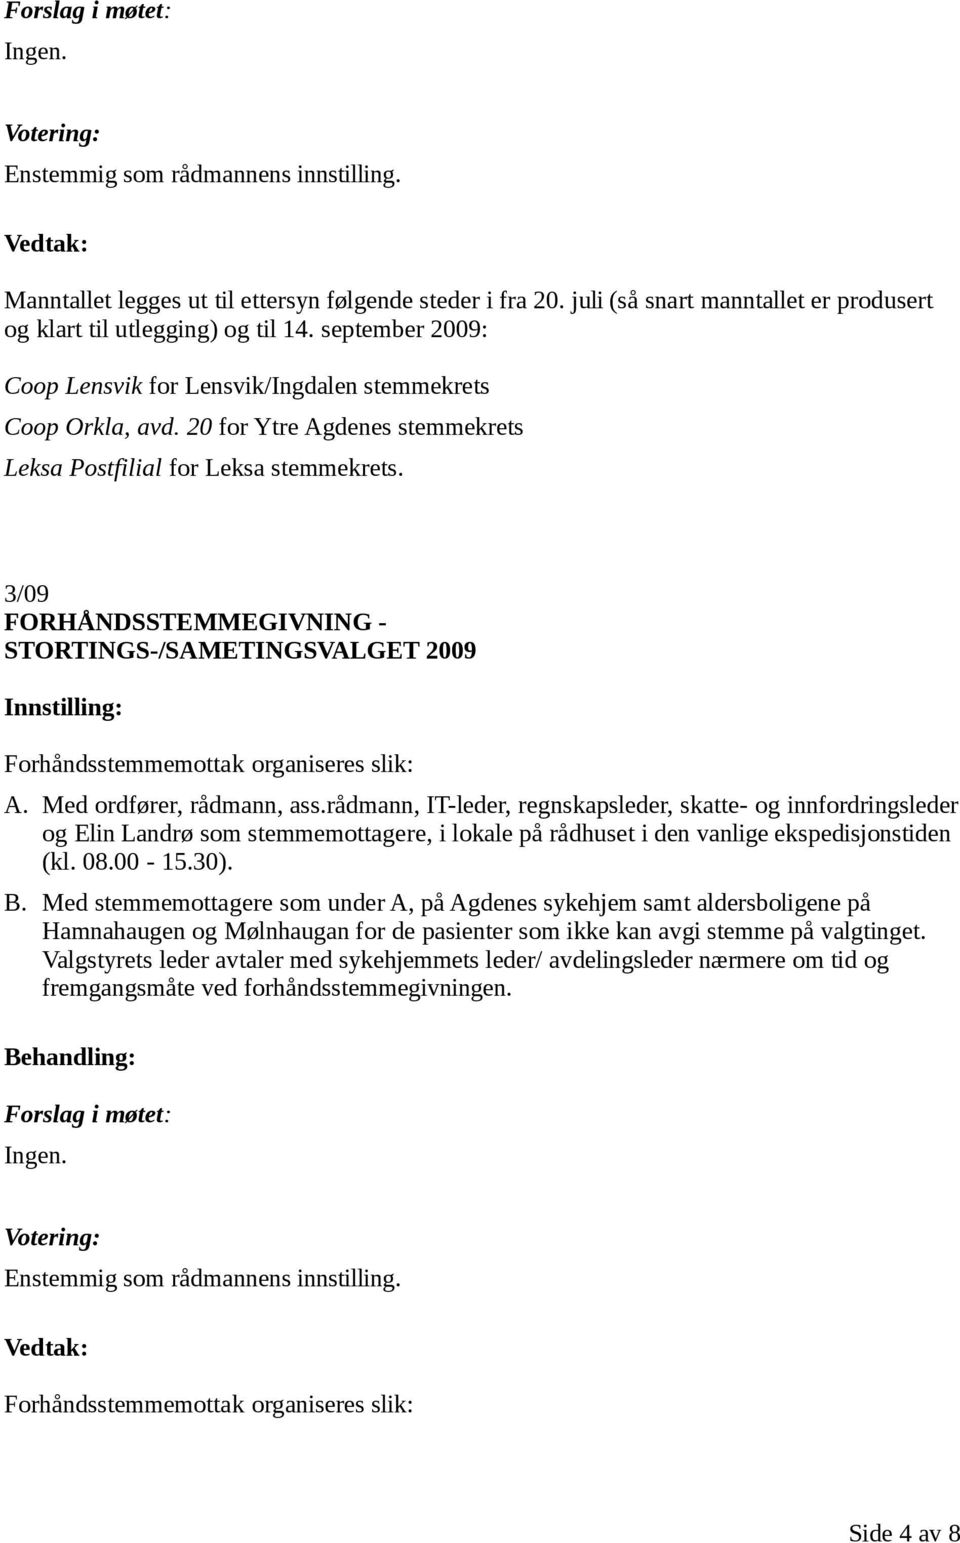 3/09 FORHÅNDSSTEMMEGIVNING - Forhåndsstemmemottak organiseres slik: A. Med ordfører, rådmann, ass.